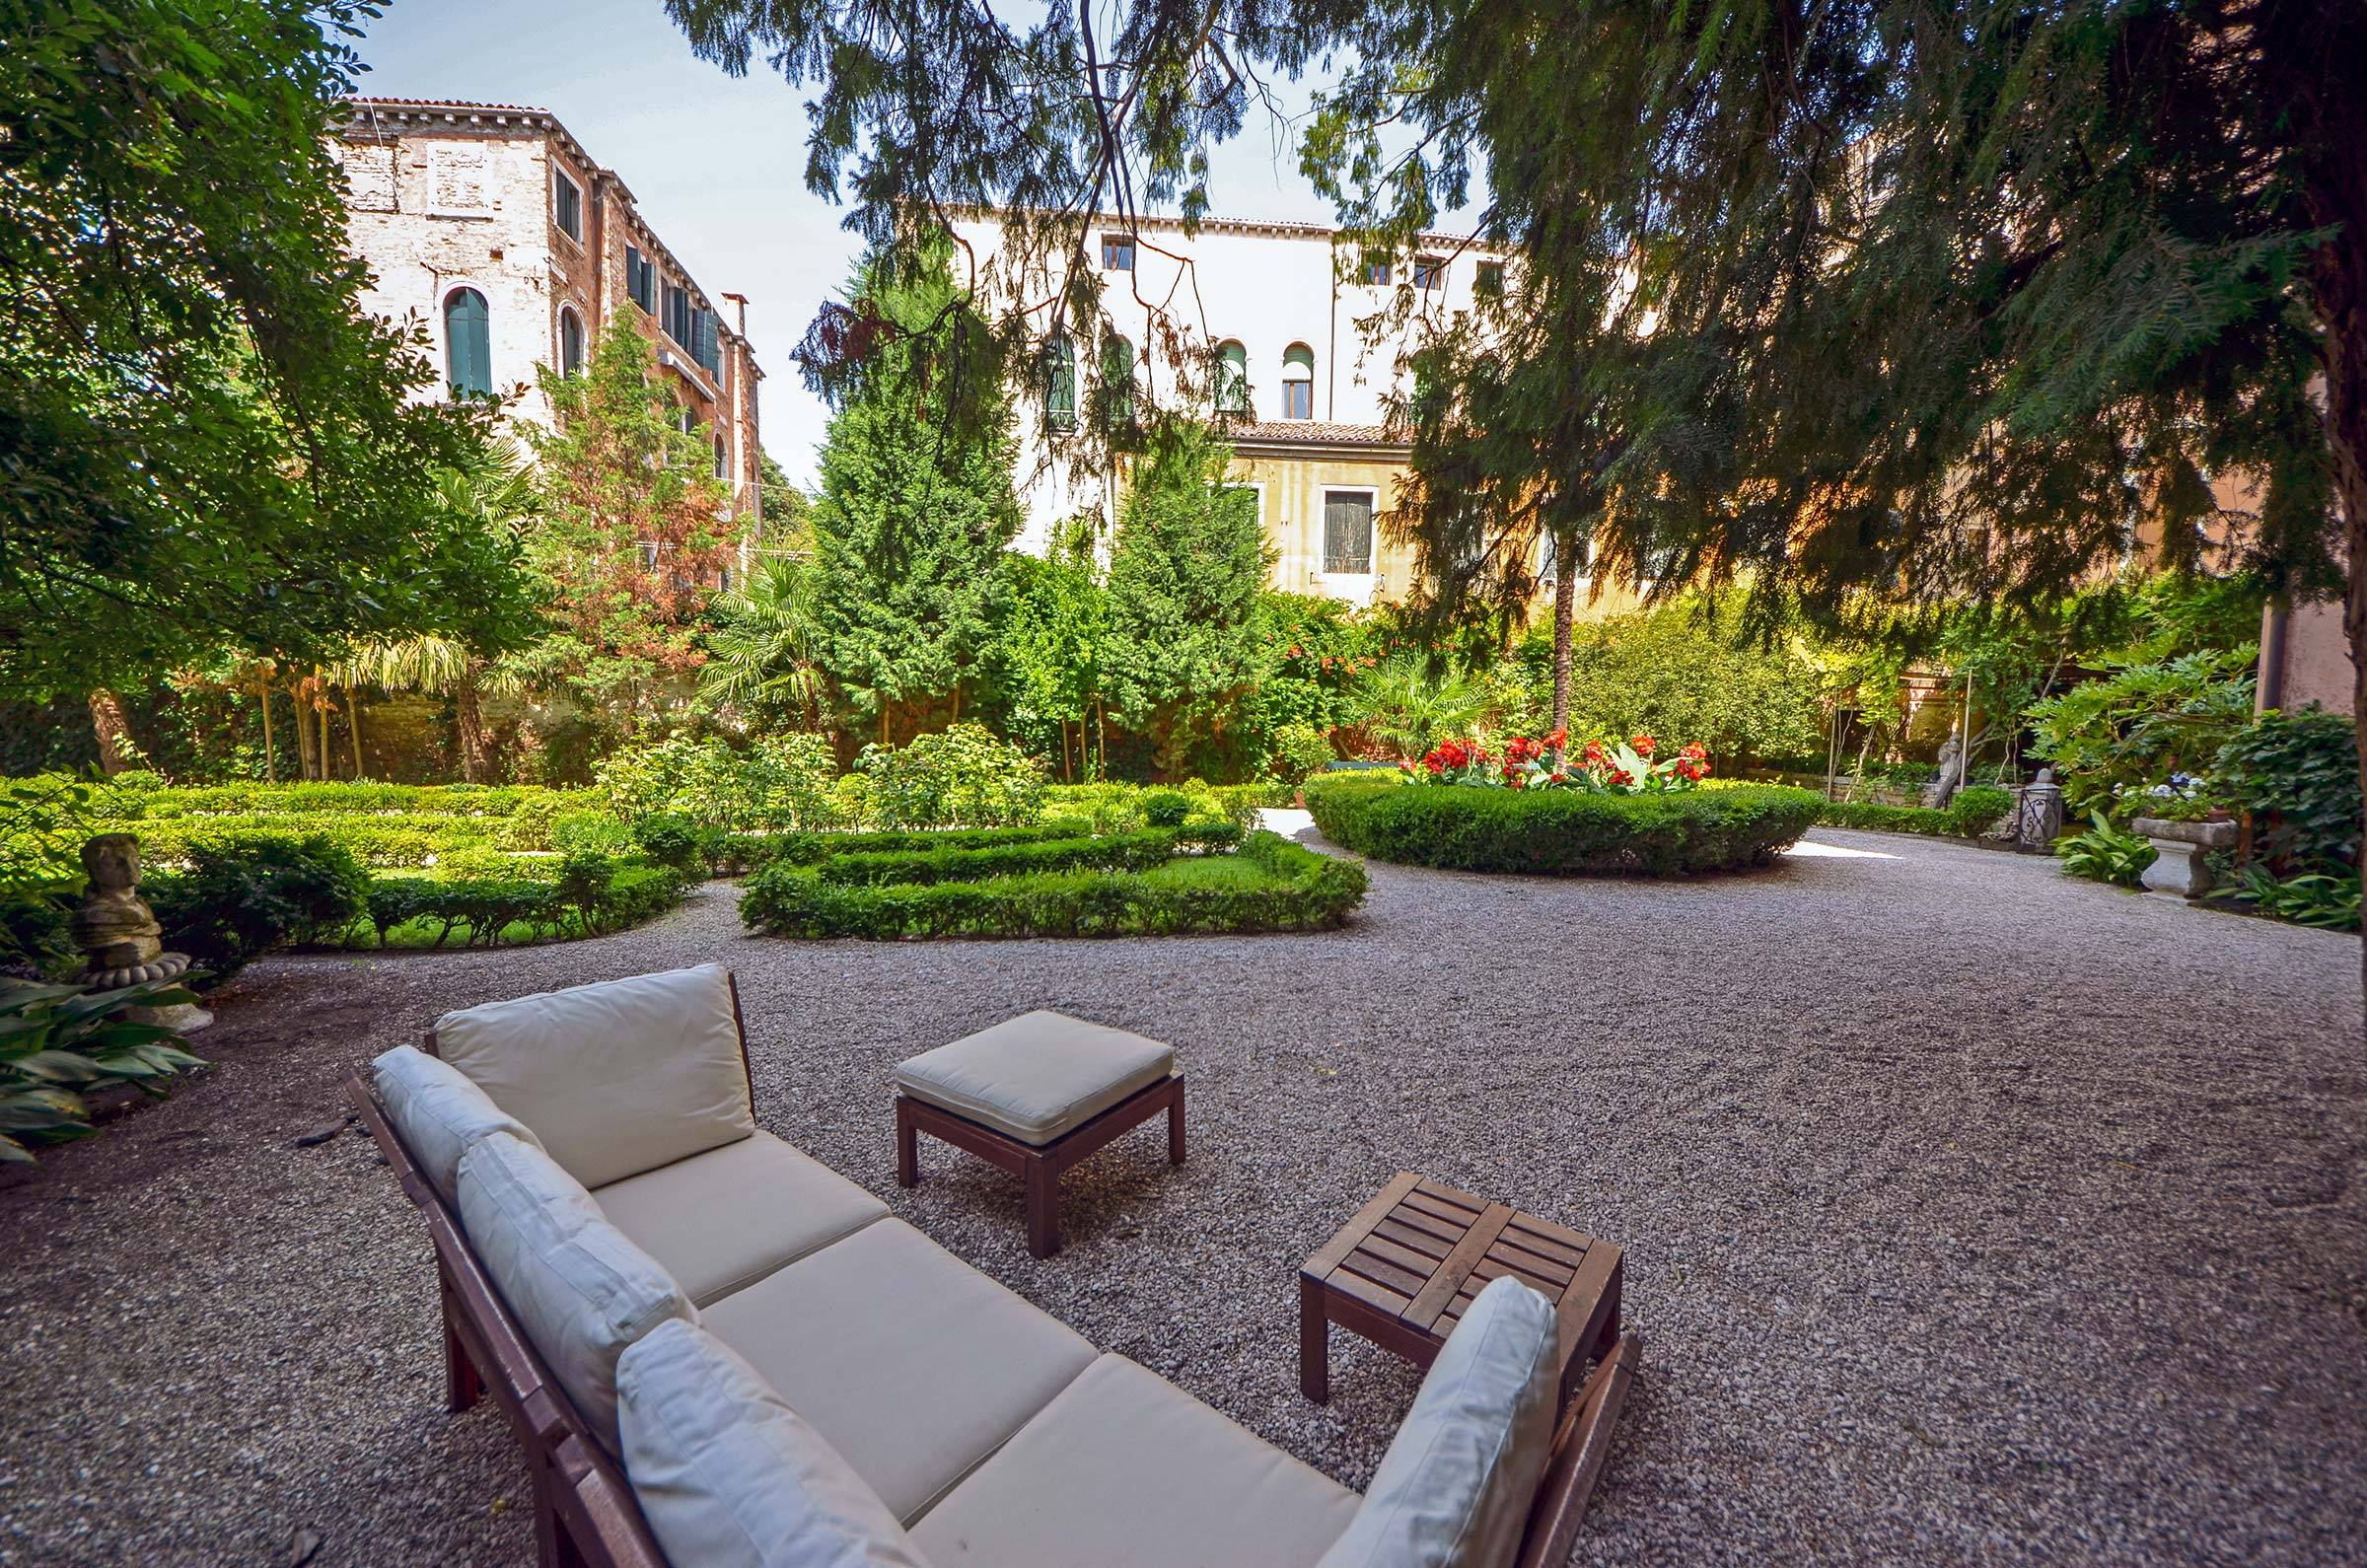 Rezzonico Palace - shared garden